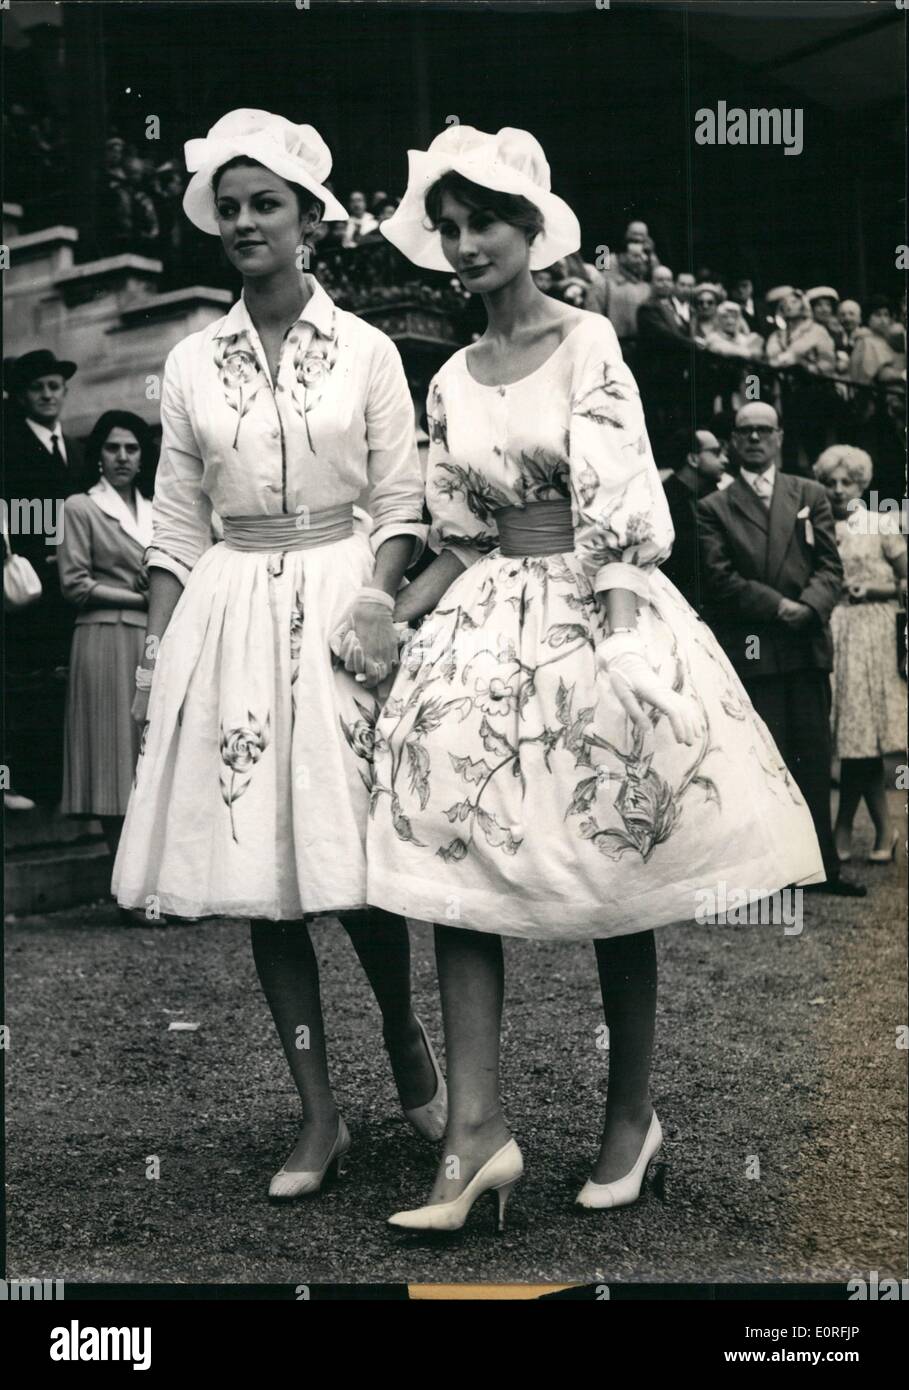 Jun. 06, 1959 - Grand Prix de Paris biggest racing event of the season. Photo shows Mannequins modelling dresses at Longchamp today. Stock Photo